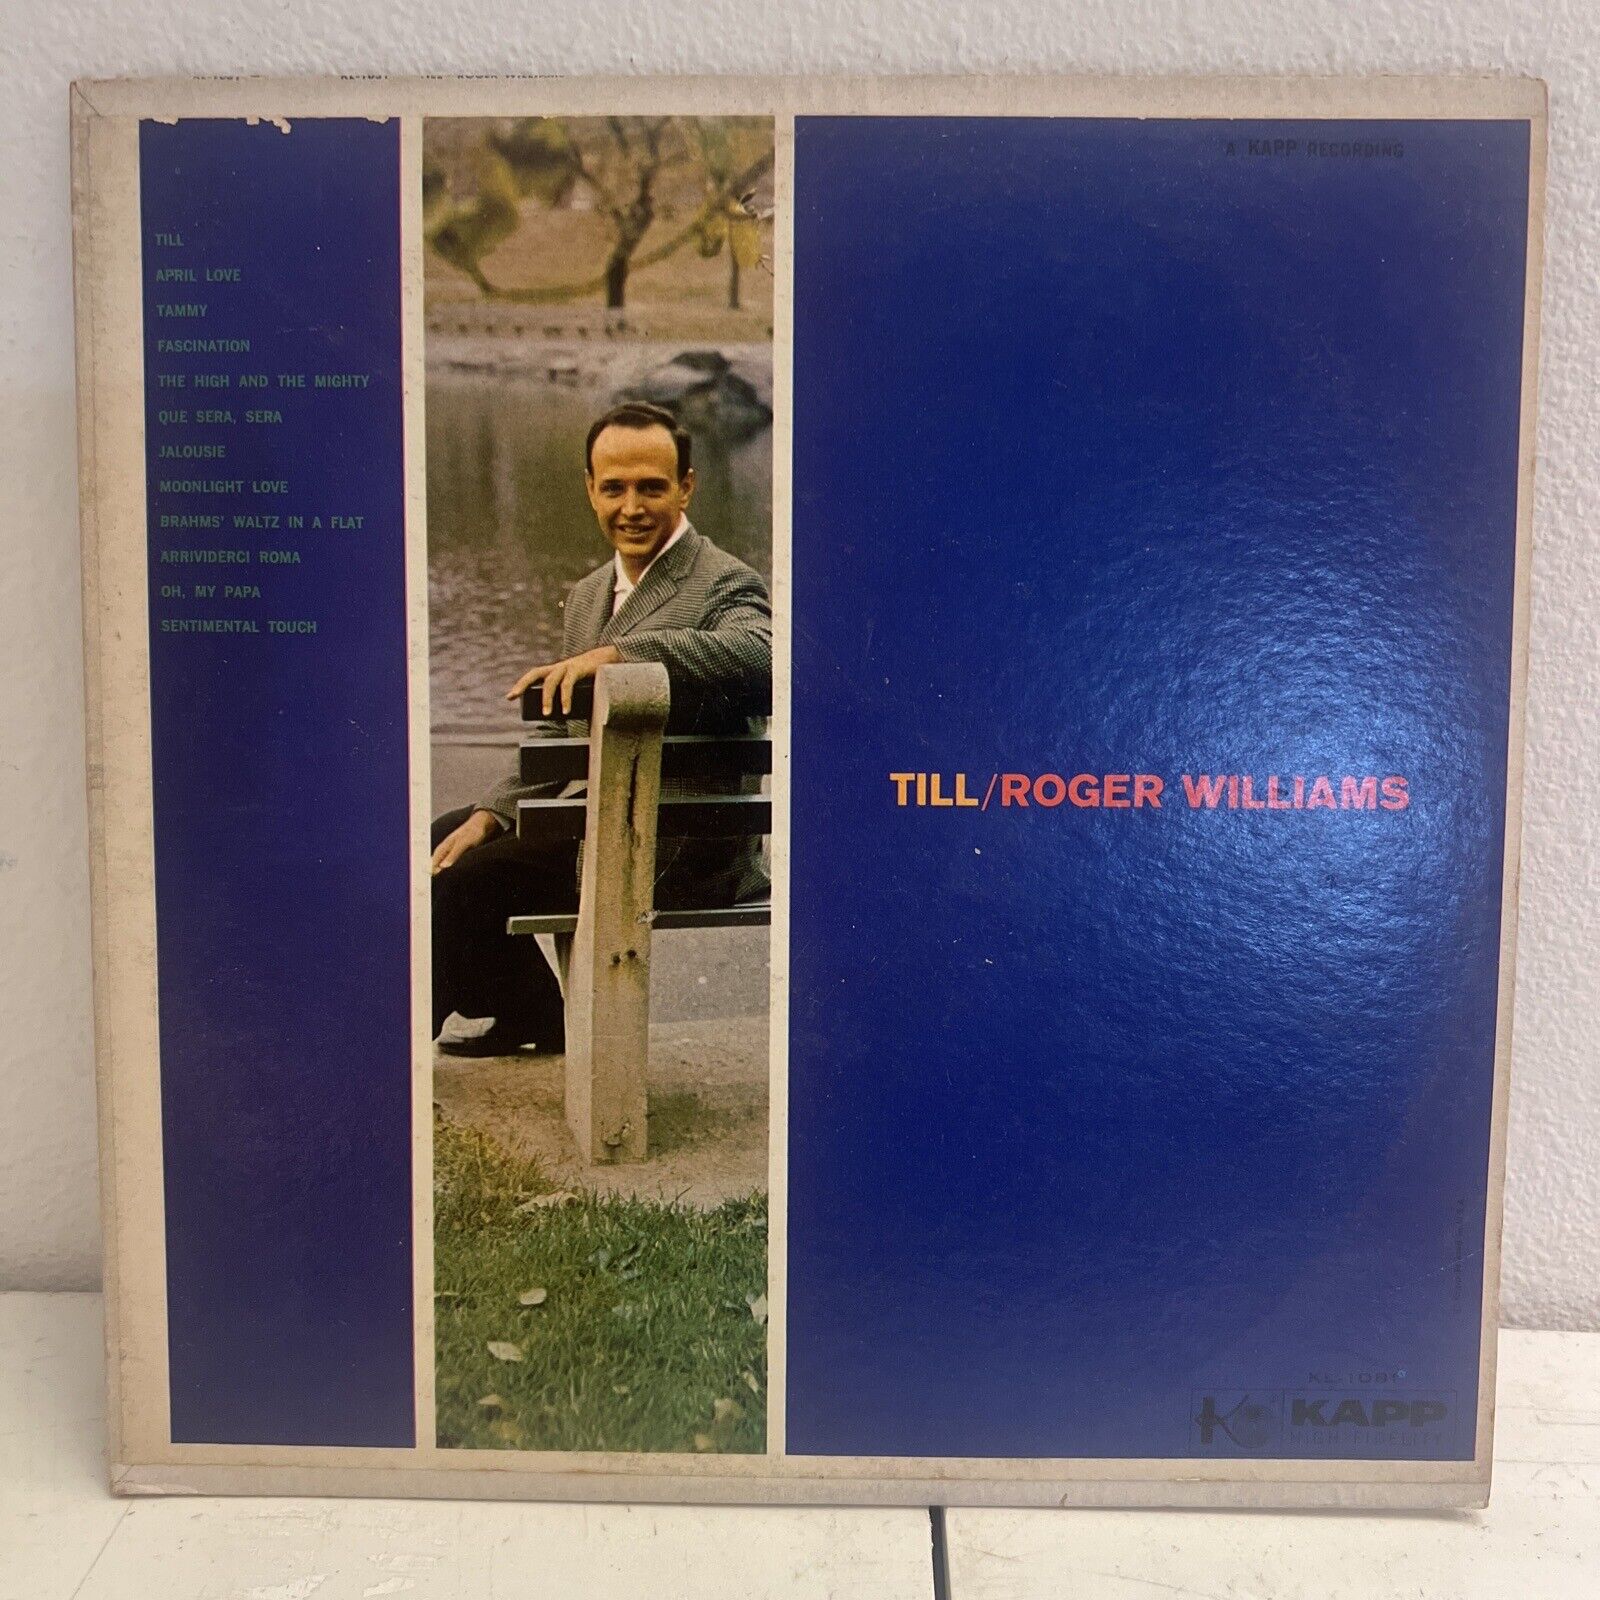 Vintage Roger Williams Till Kapp Records Hi Fidelity LP Vinyl Record Album